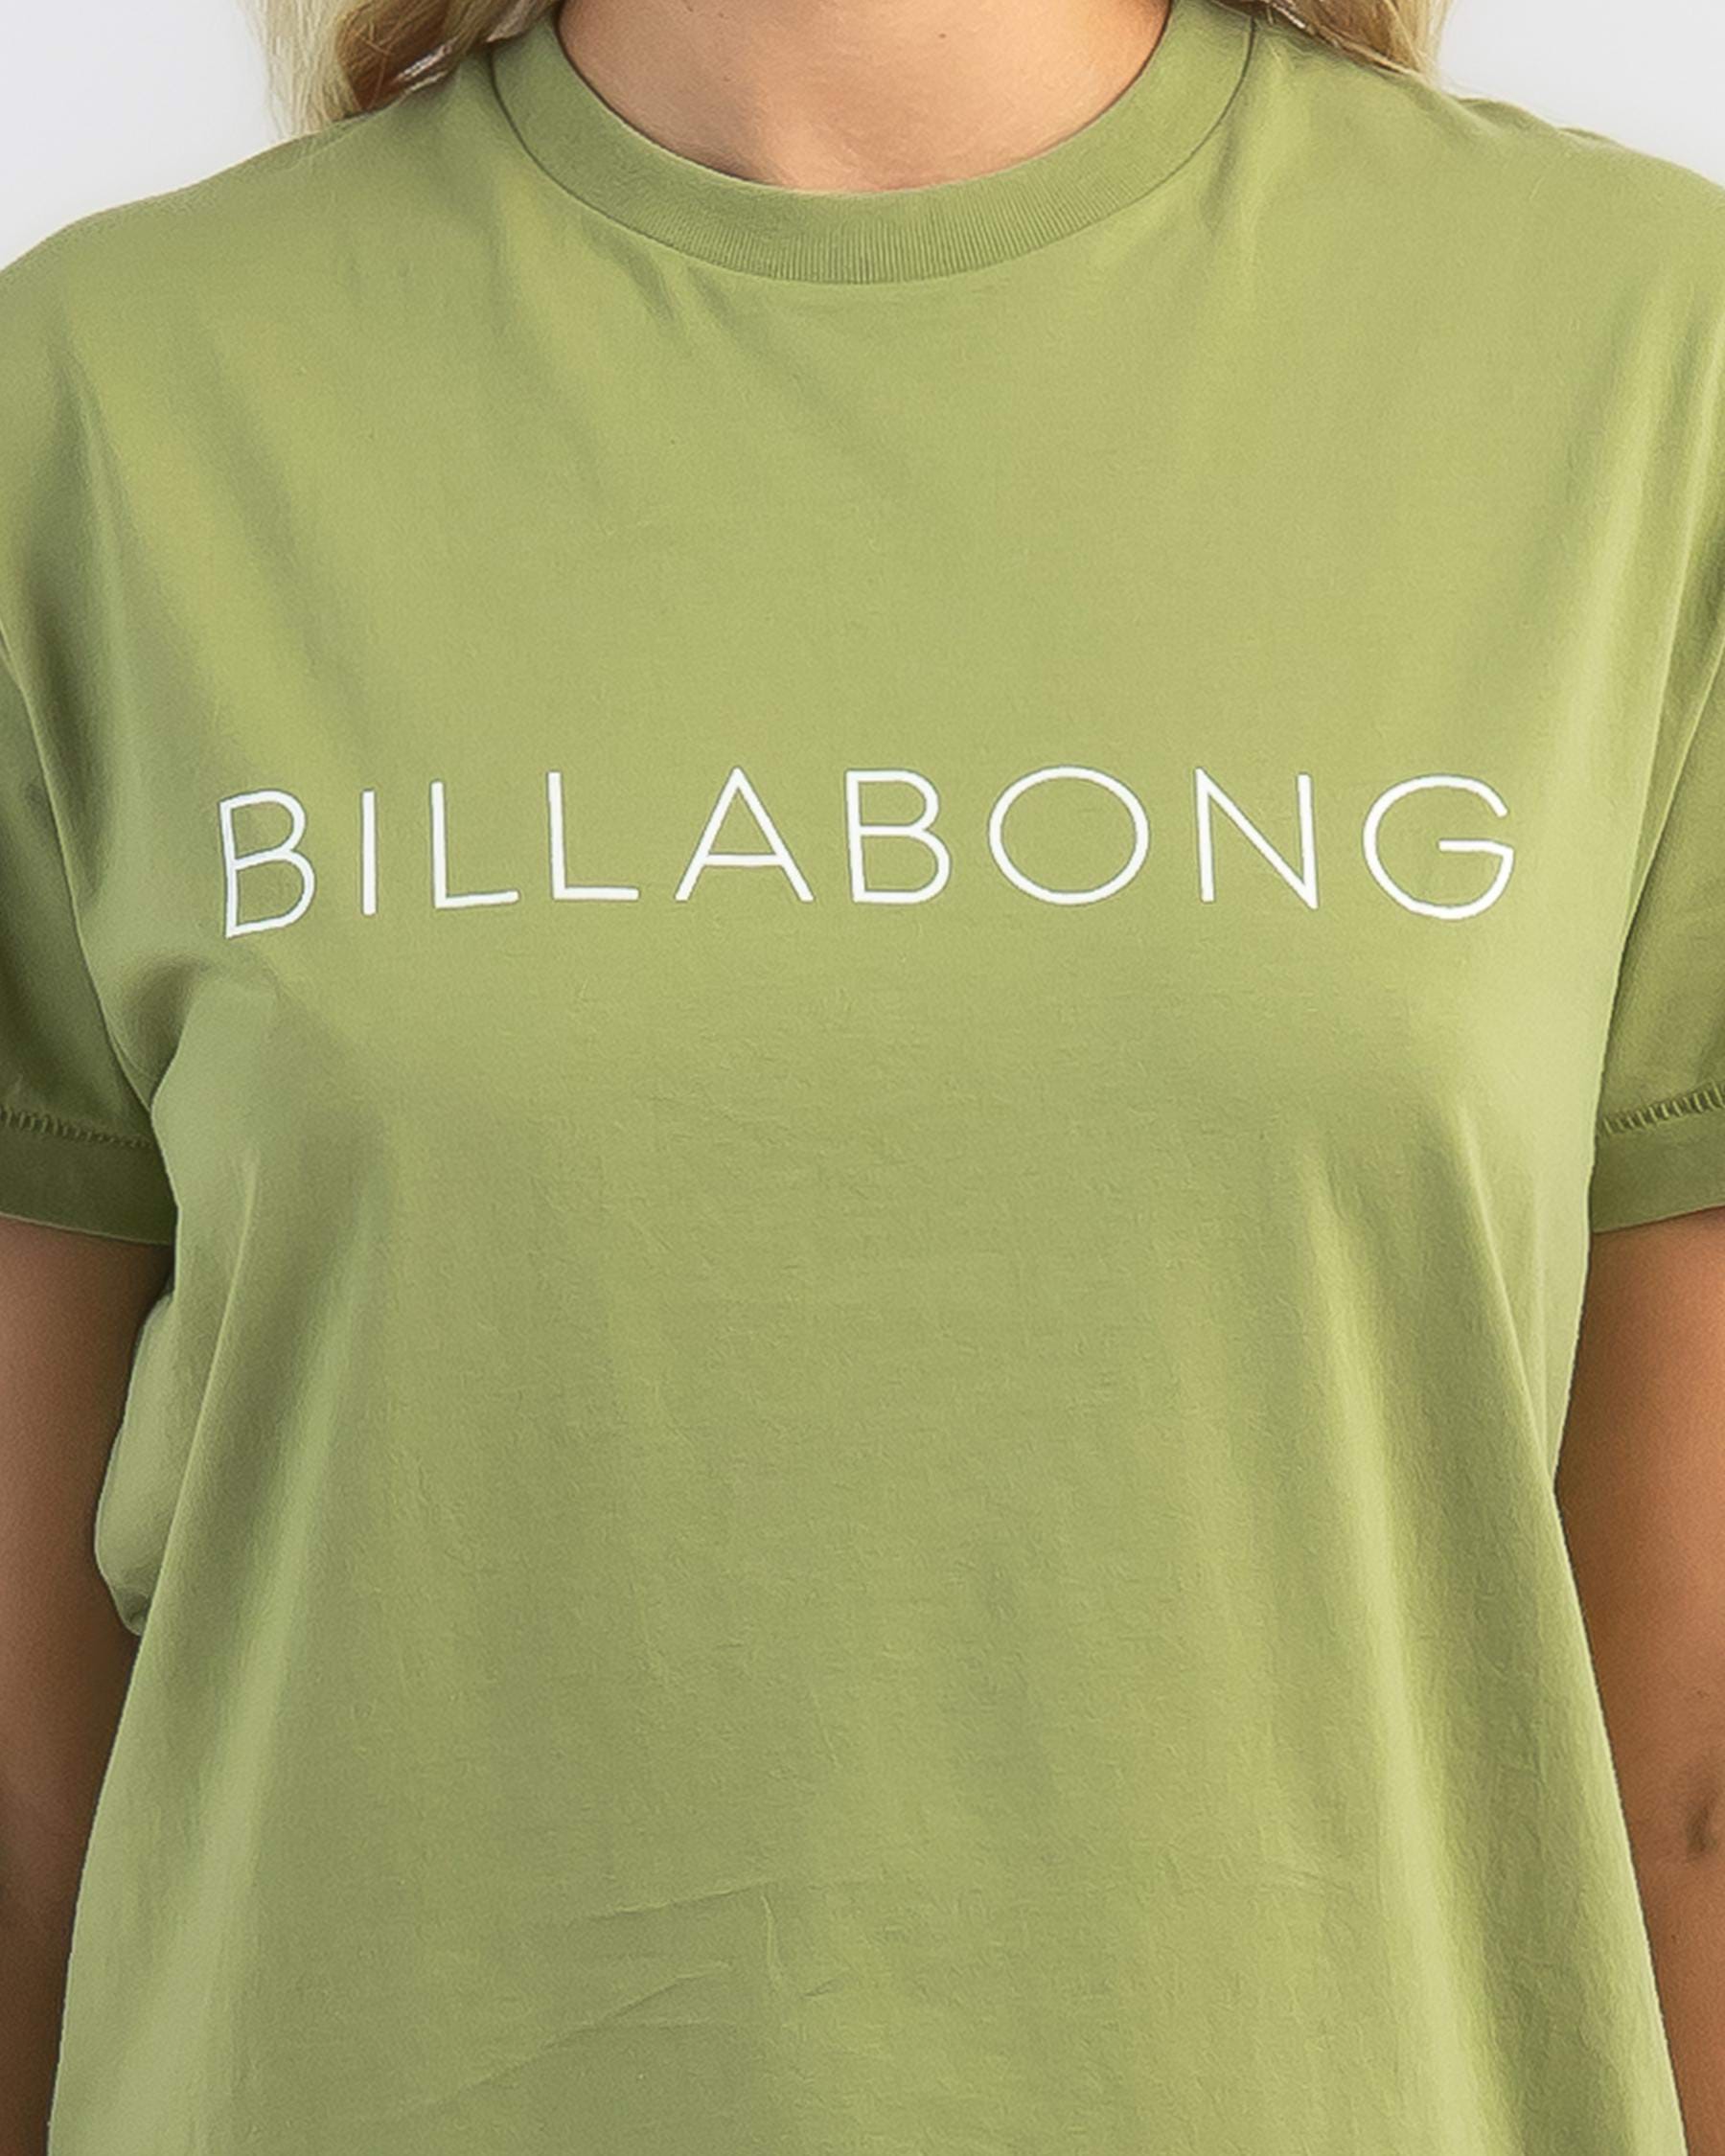 Billabong Long Island T-Shirt In Avocado - Fast Shipping & Easy Returns ...